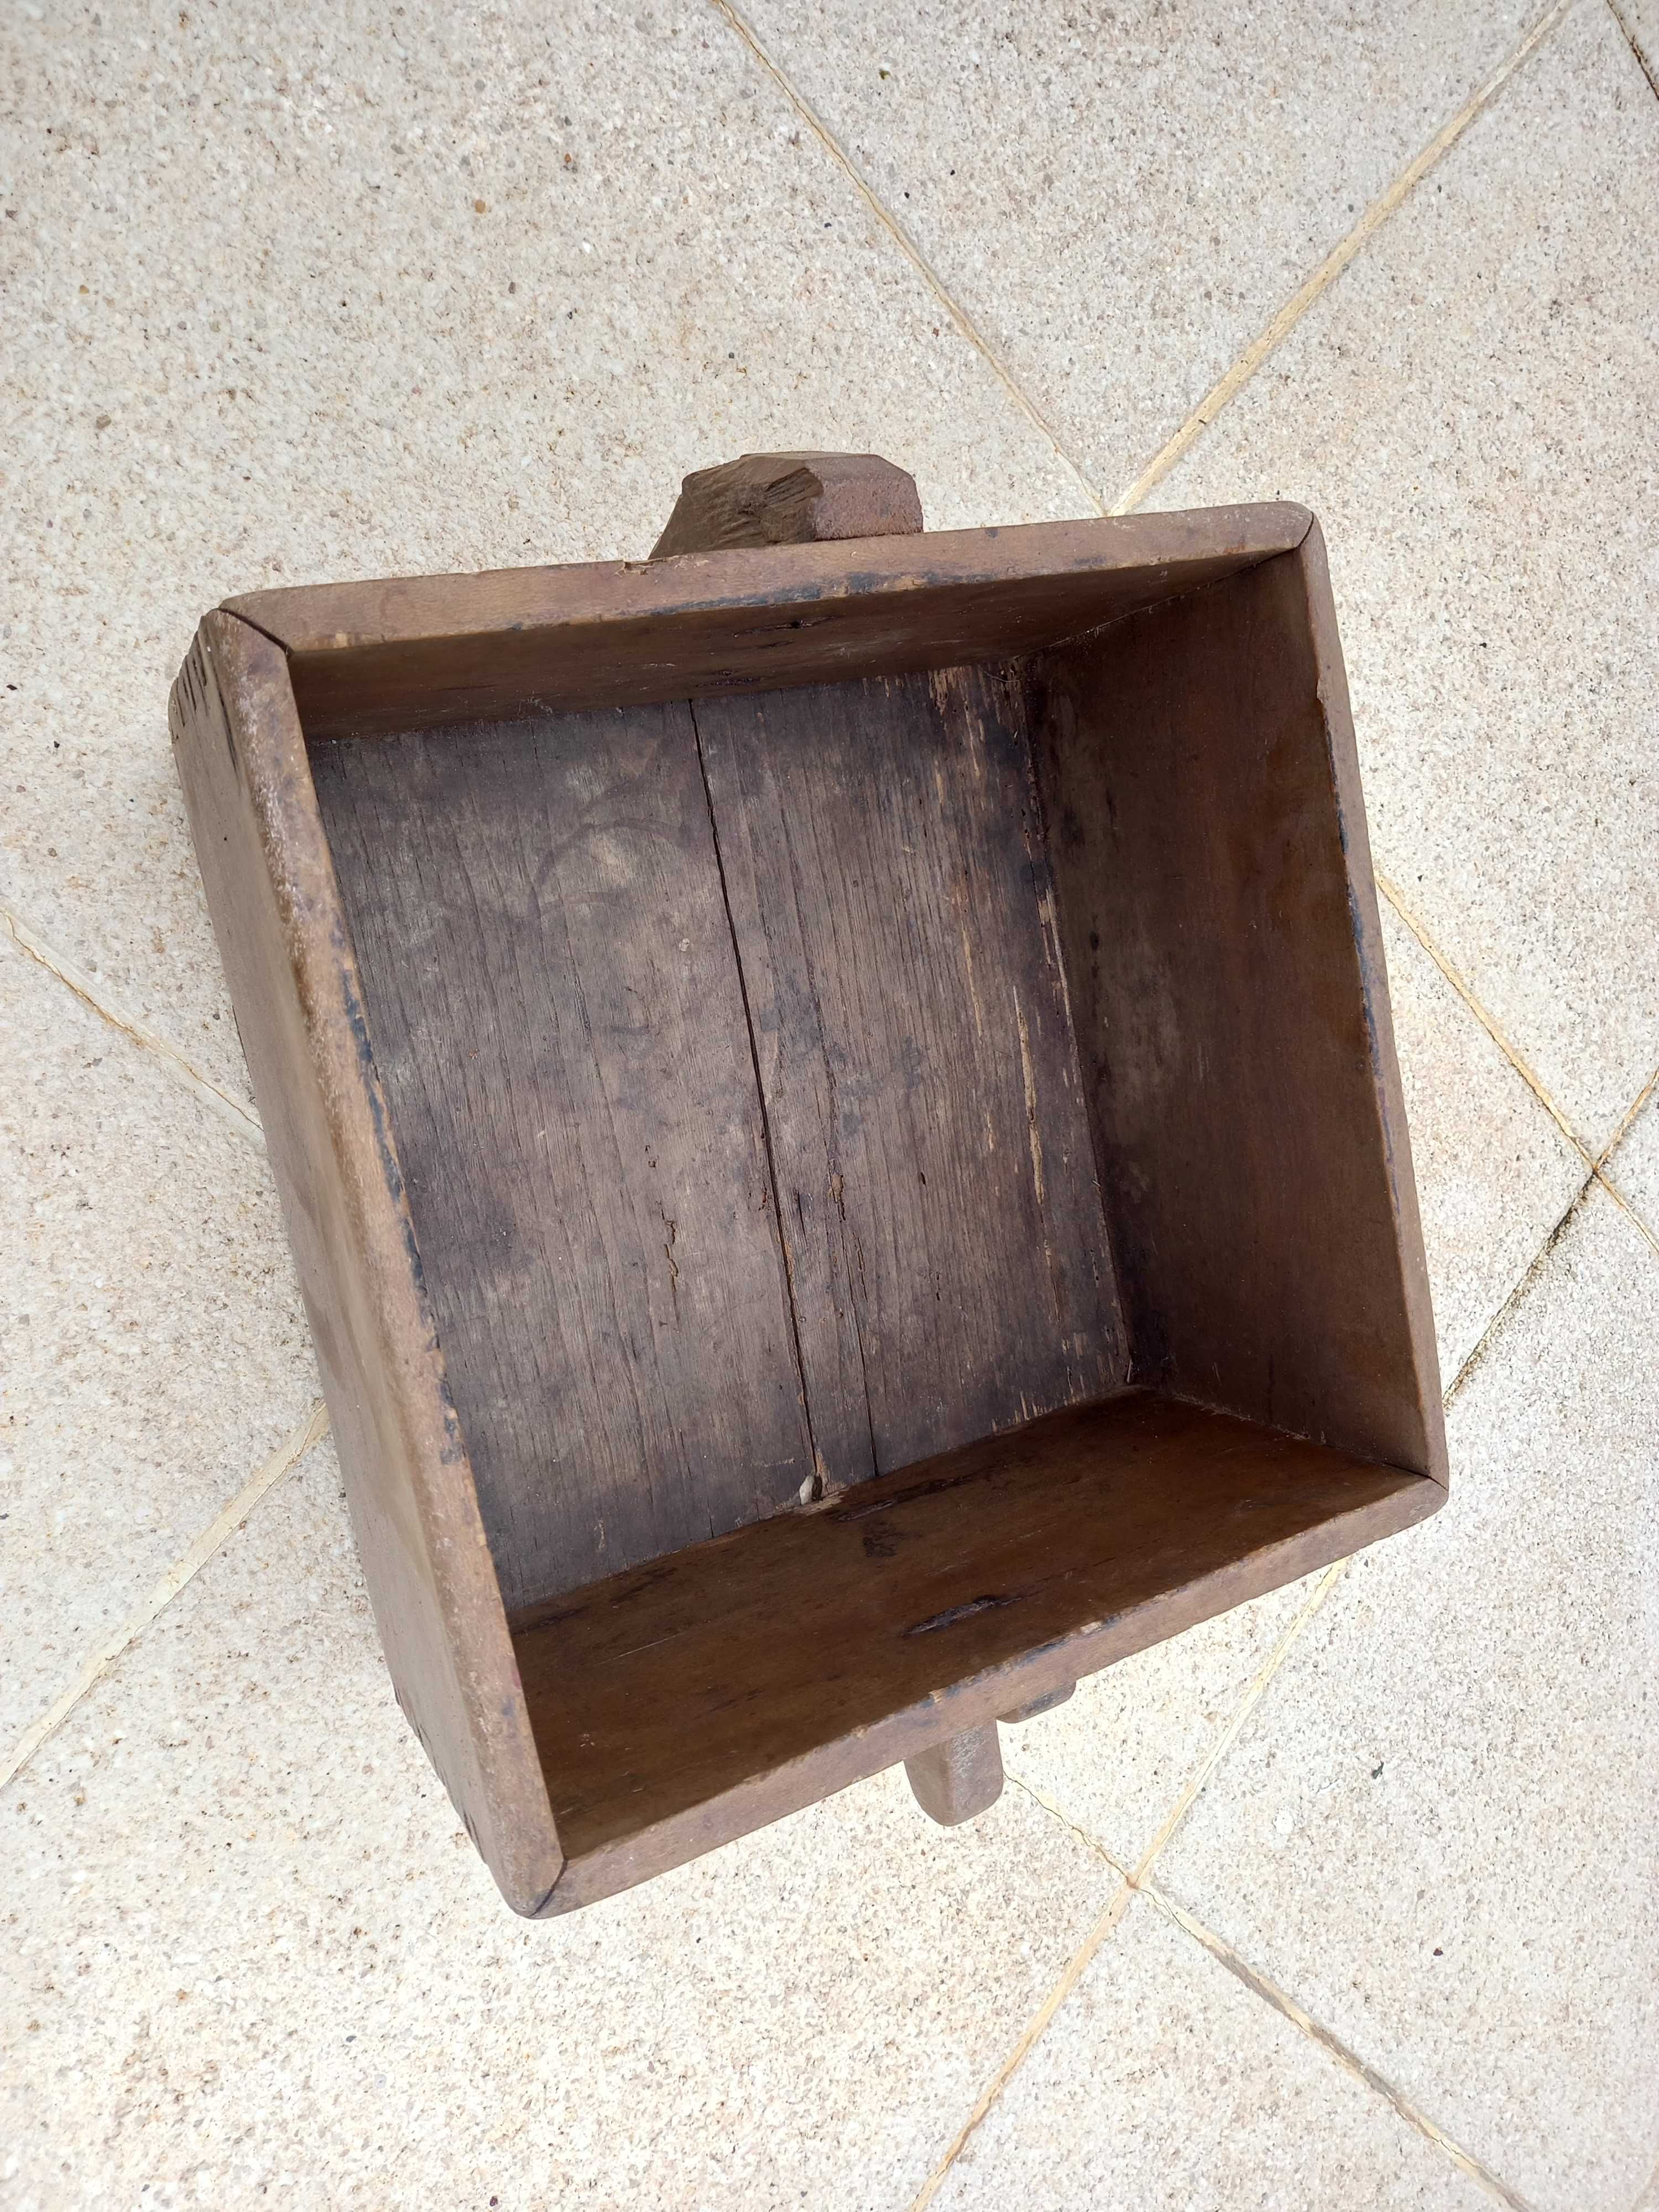 Rasa, alqueire, caixa antiga de medida de cereais